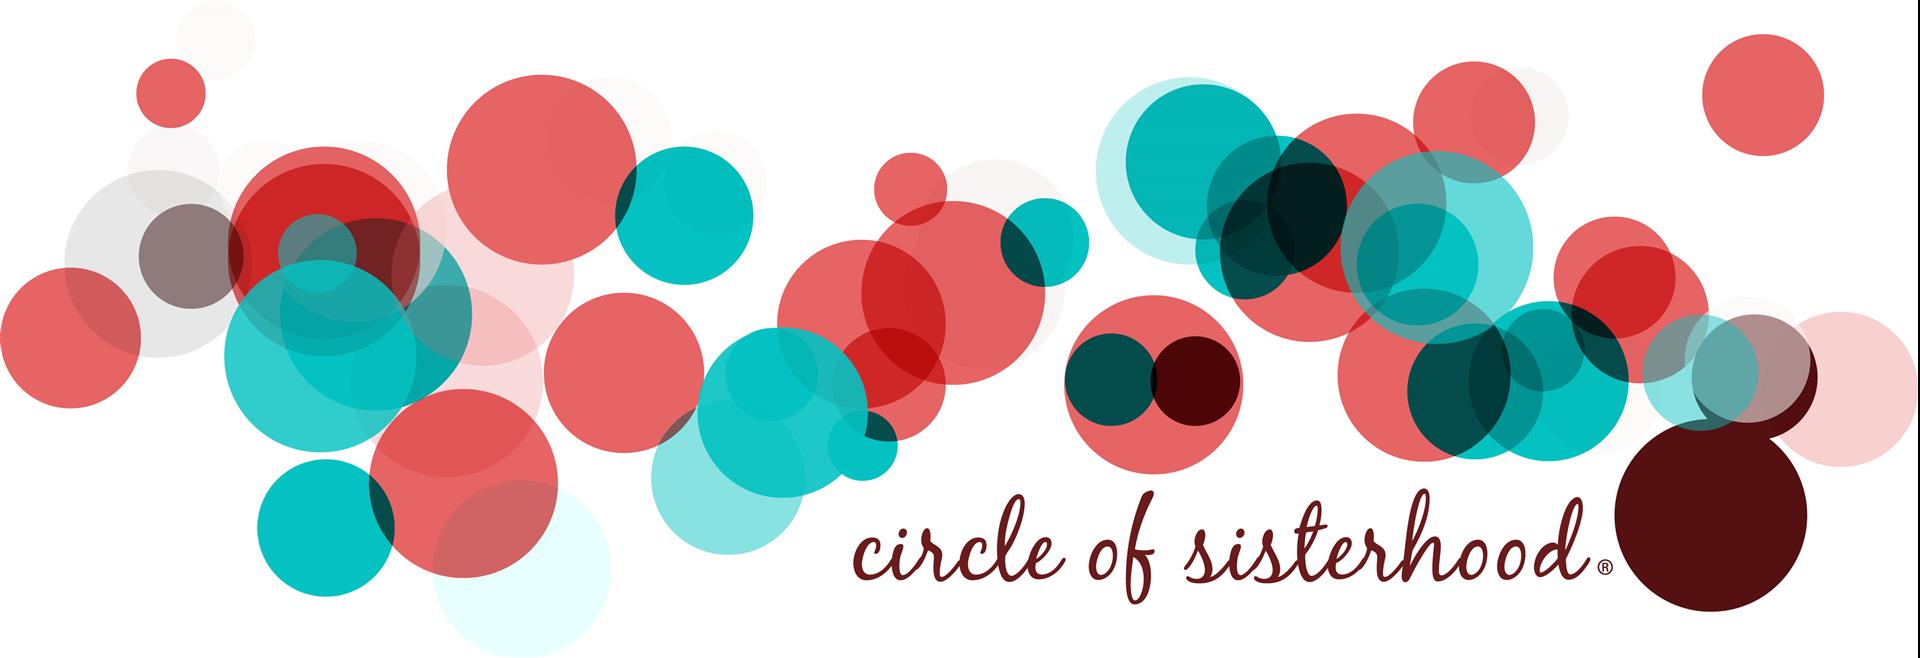 circle of sisterhood